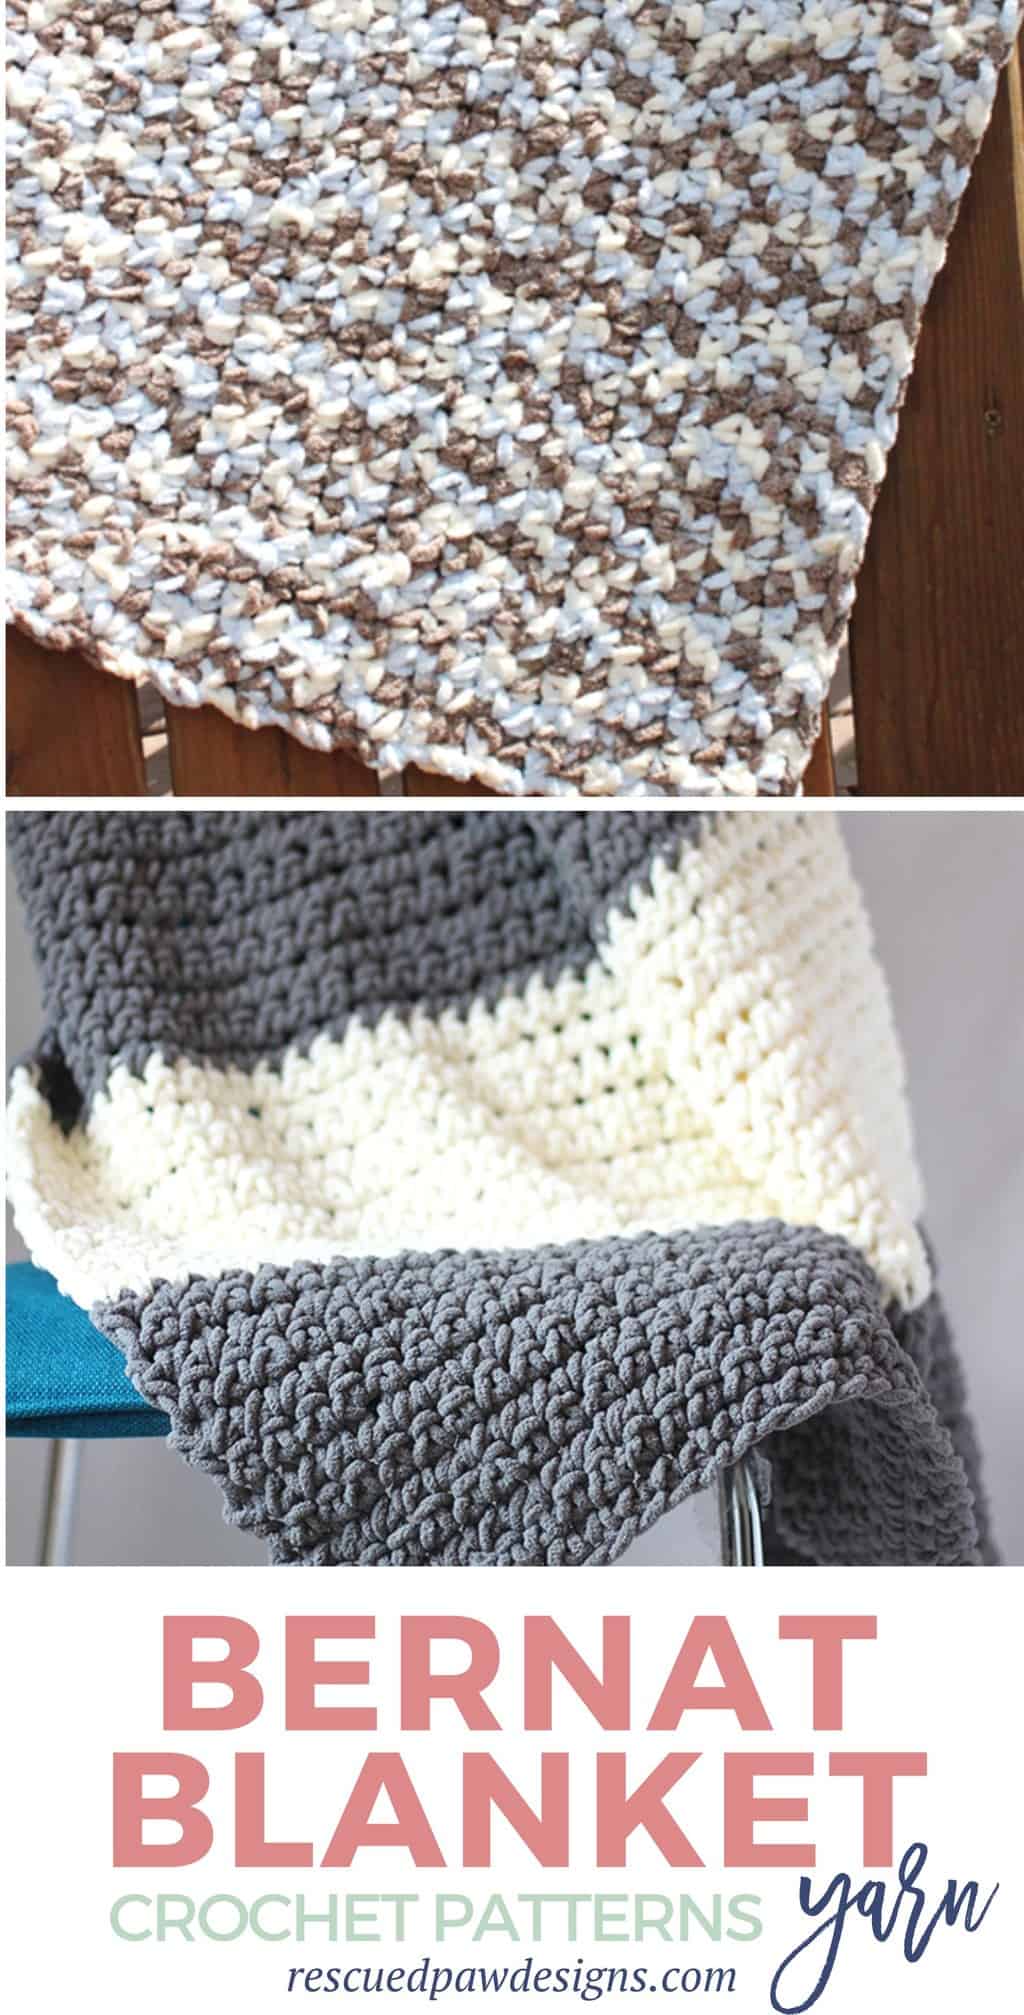 Bernat blanket extra yarn patterns knit